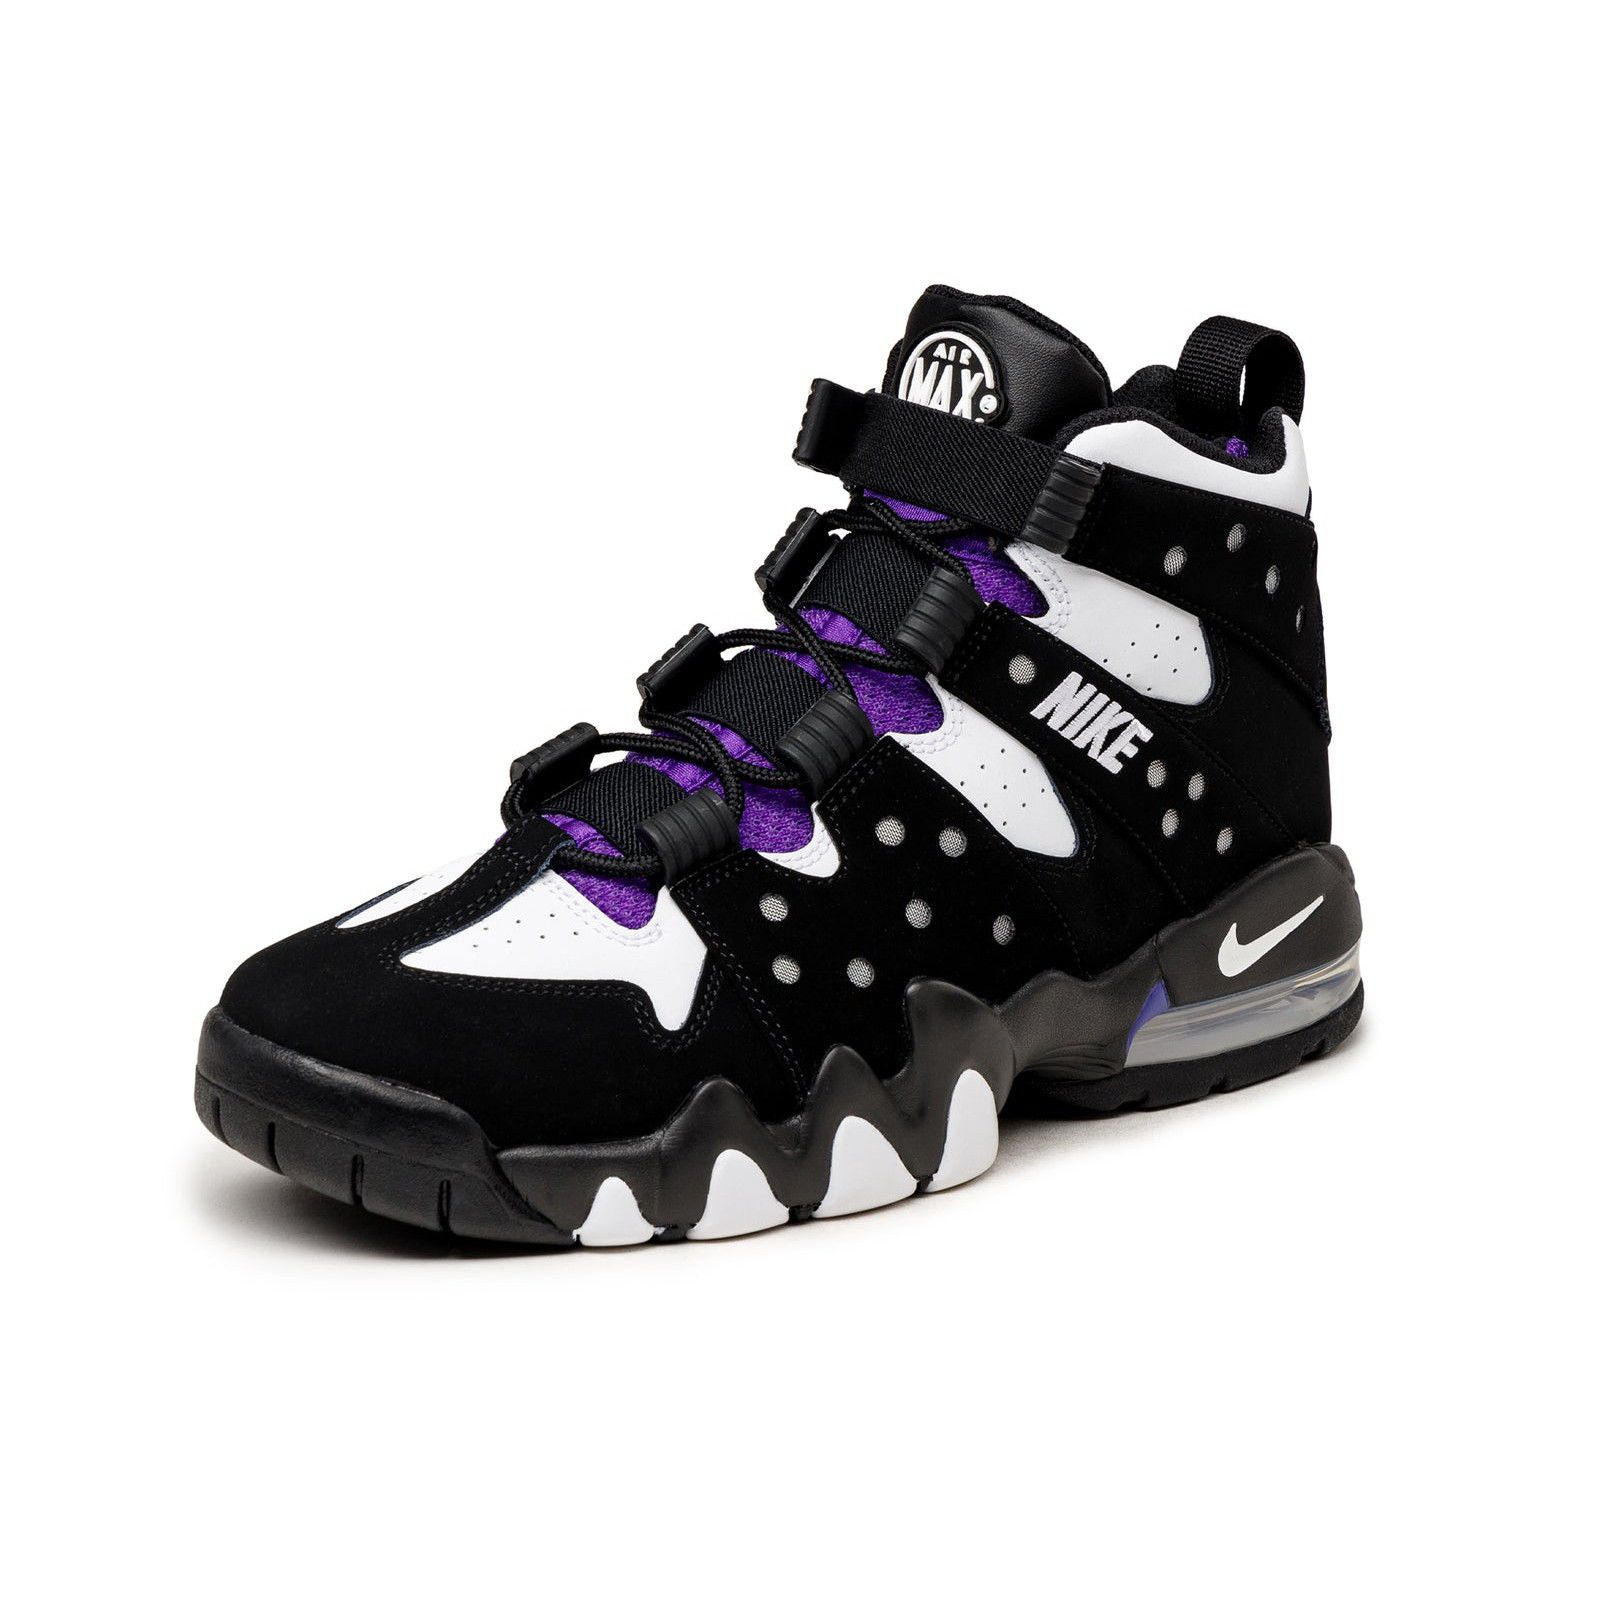 Nike Air Max 2 CB 94 OG
Black / White Purple